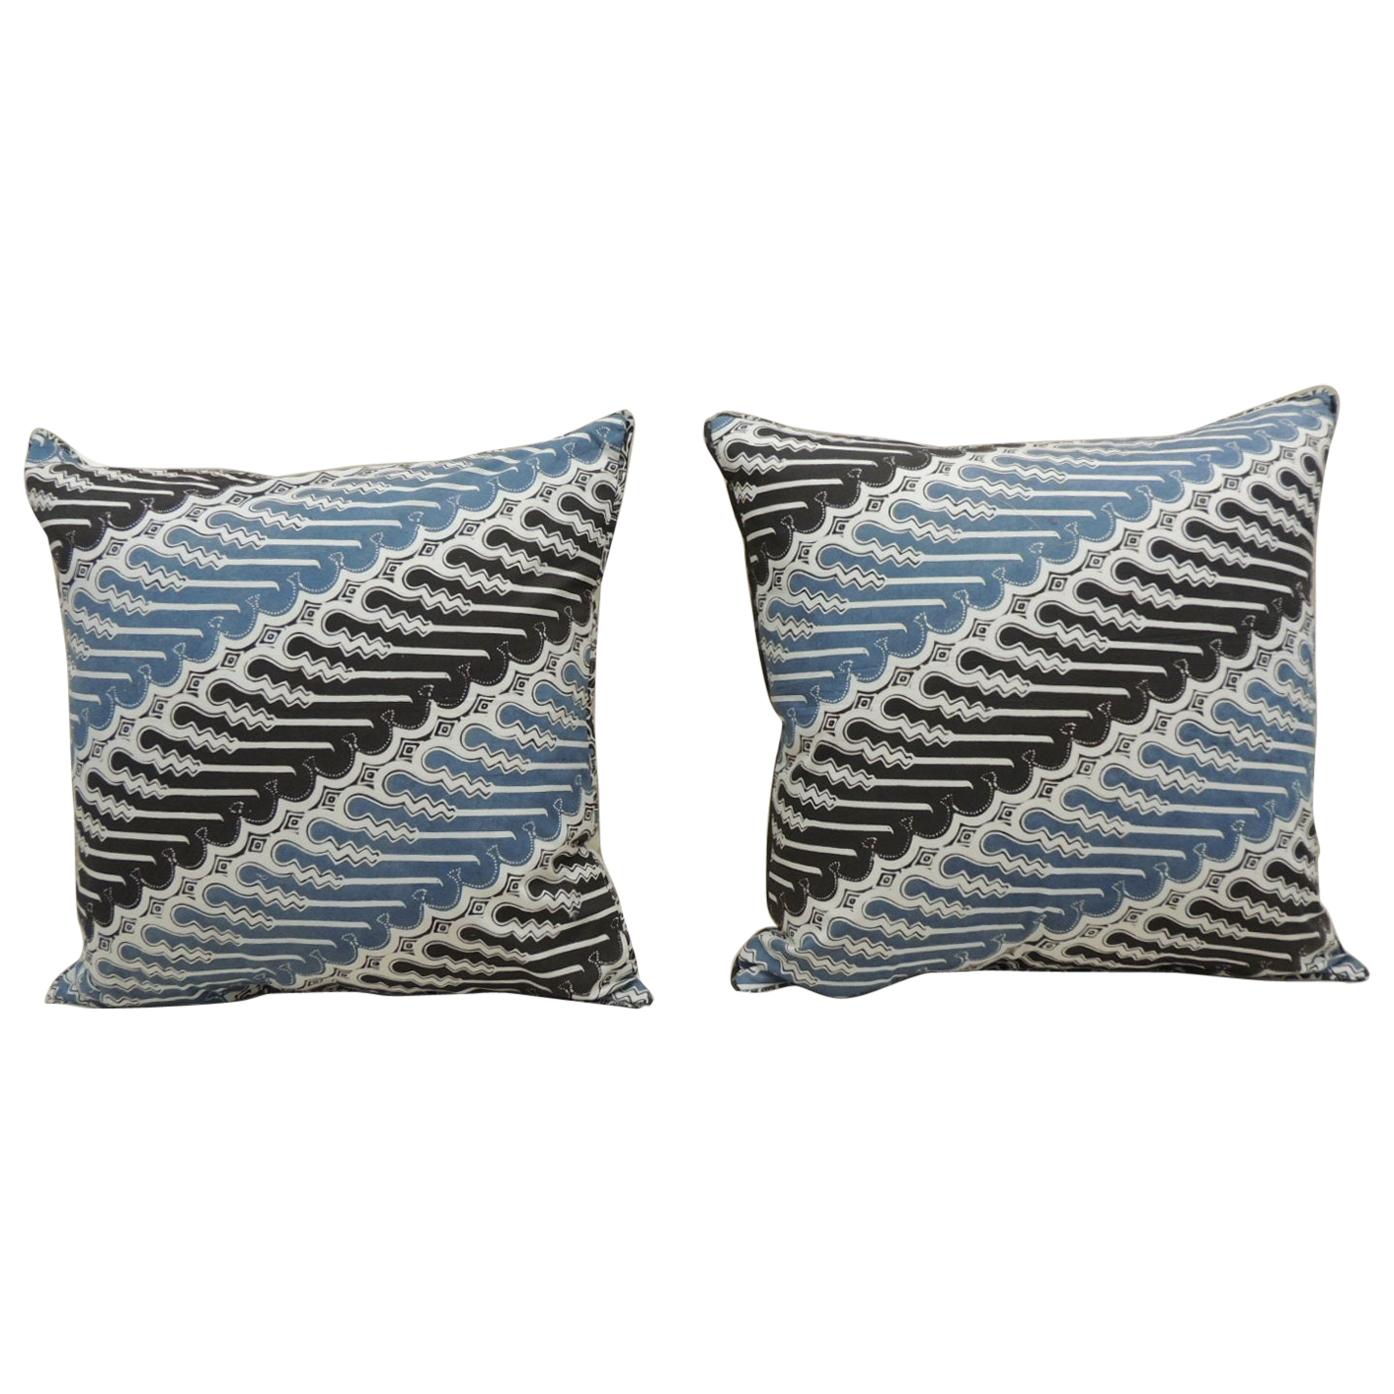 Pair of Vintage Blue and Black Hand-Blocked Batik Decorative Square Pillows